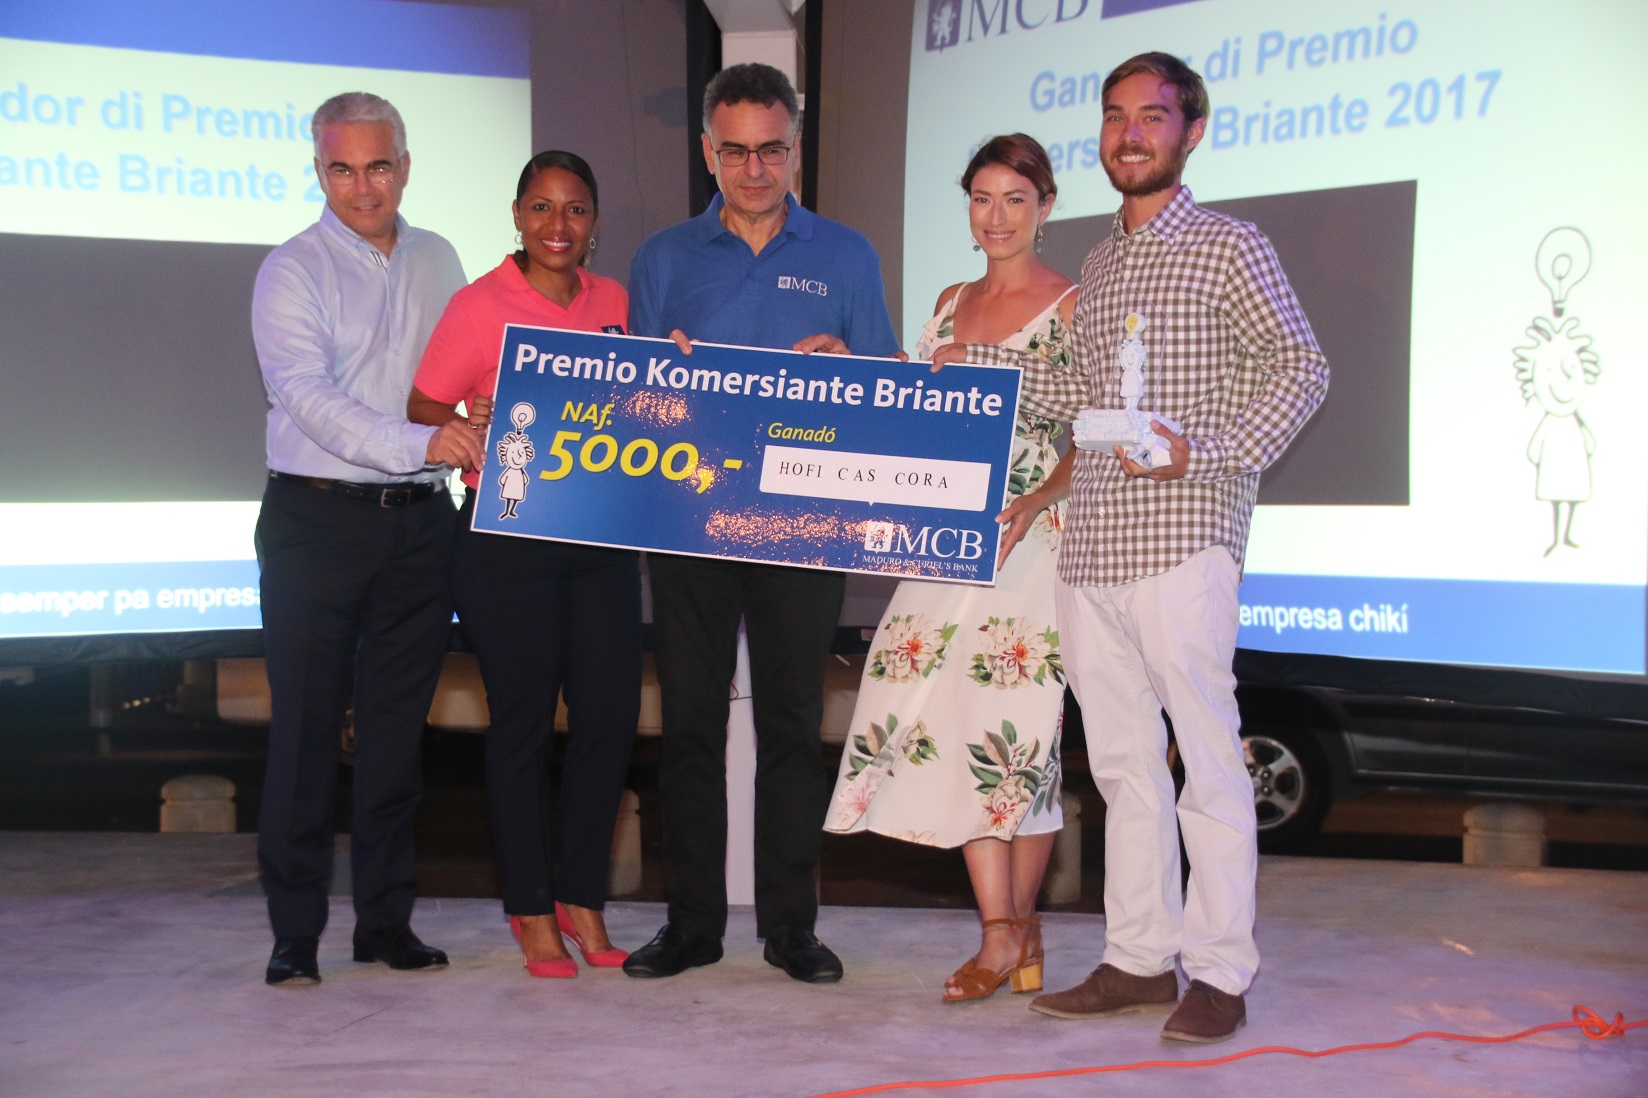 Hofi Cas Cora ganadó di Premio Komersiante Briante 2017 di Maduro & Curiel’s Bank.